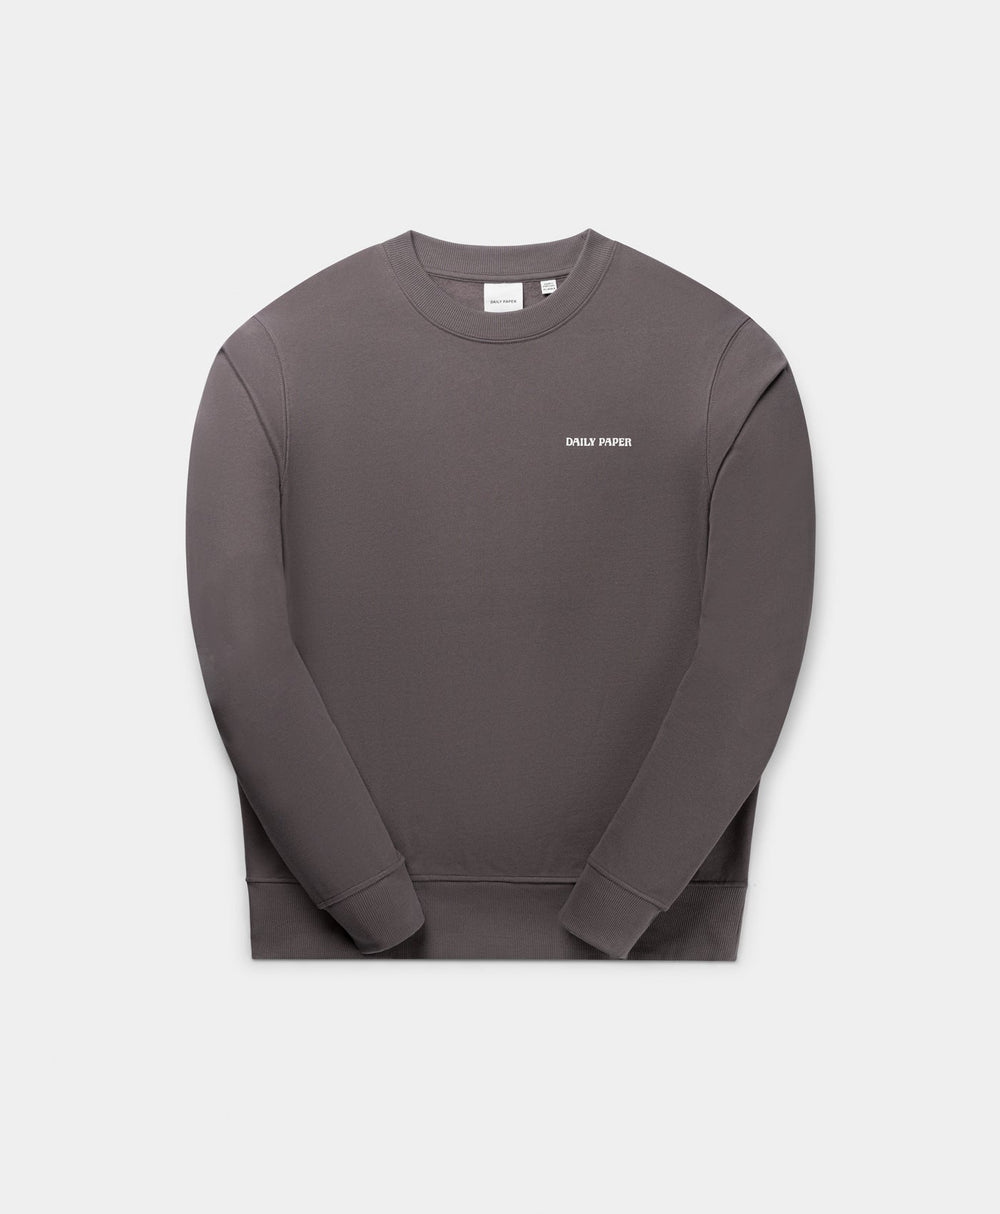 DP - Rabbit Grey Dias Sweater - Packshot - front 